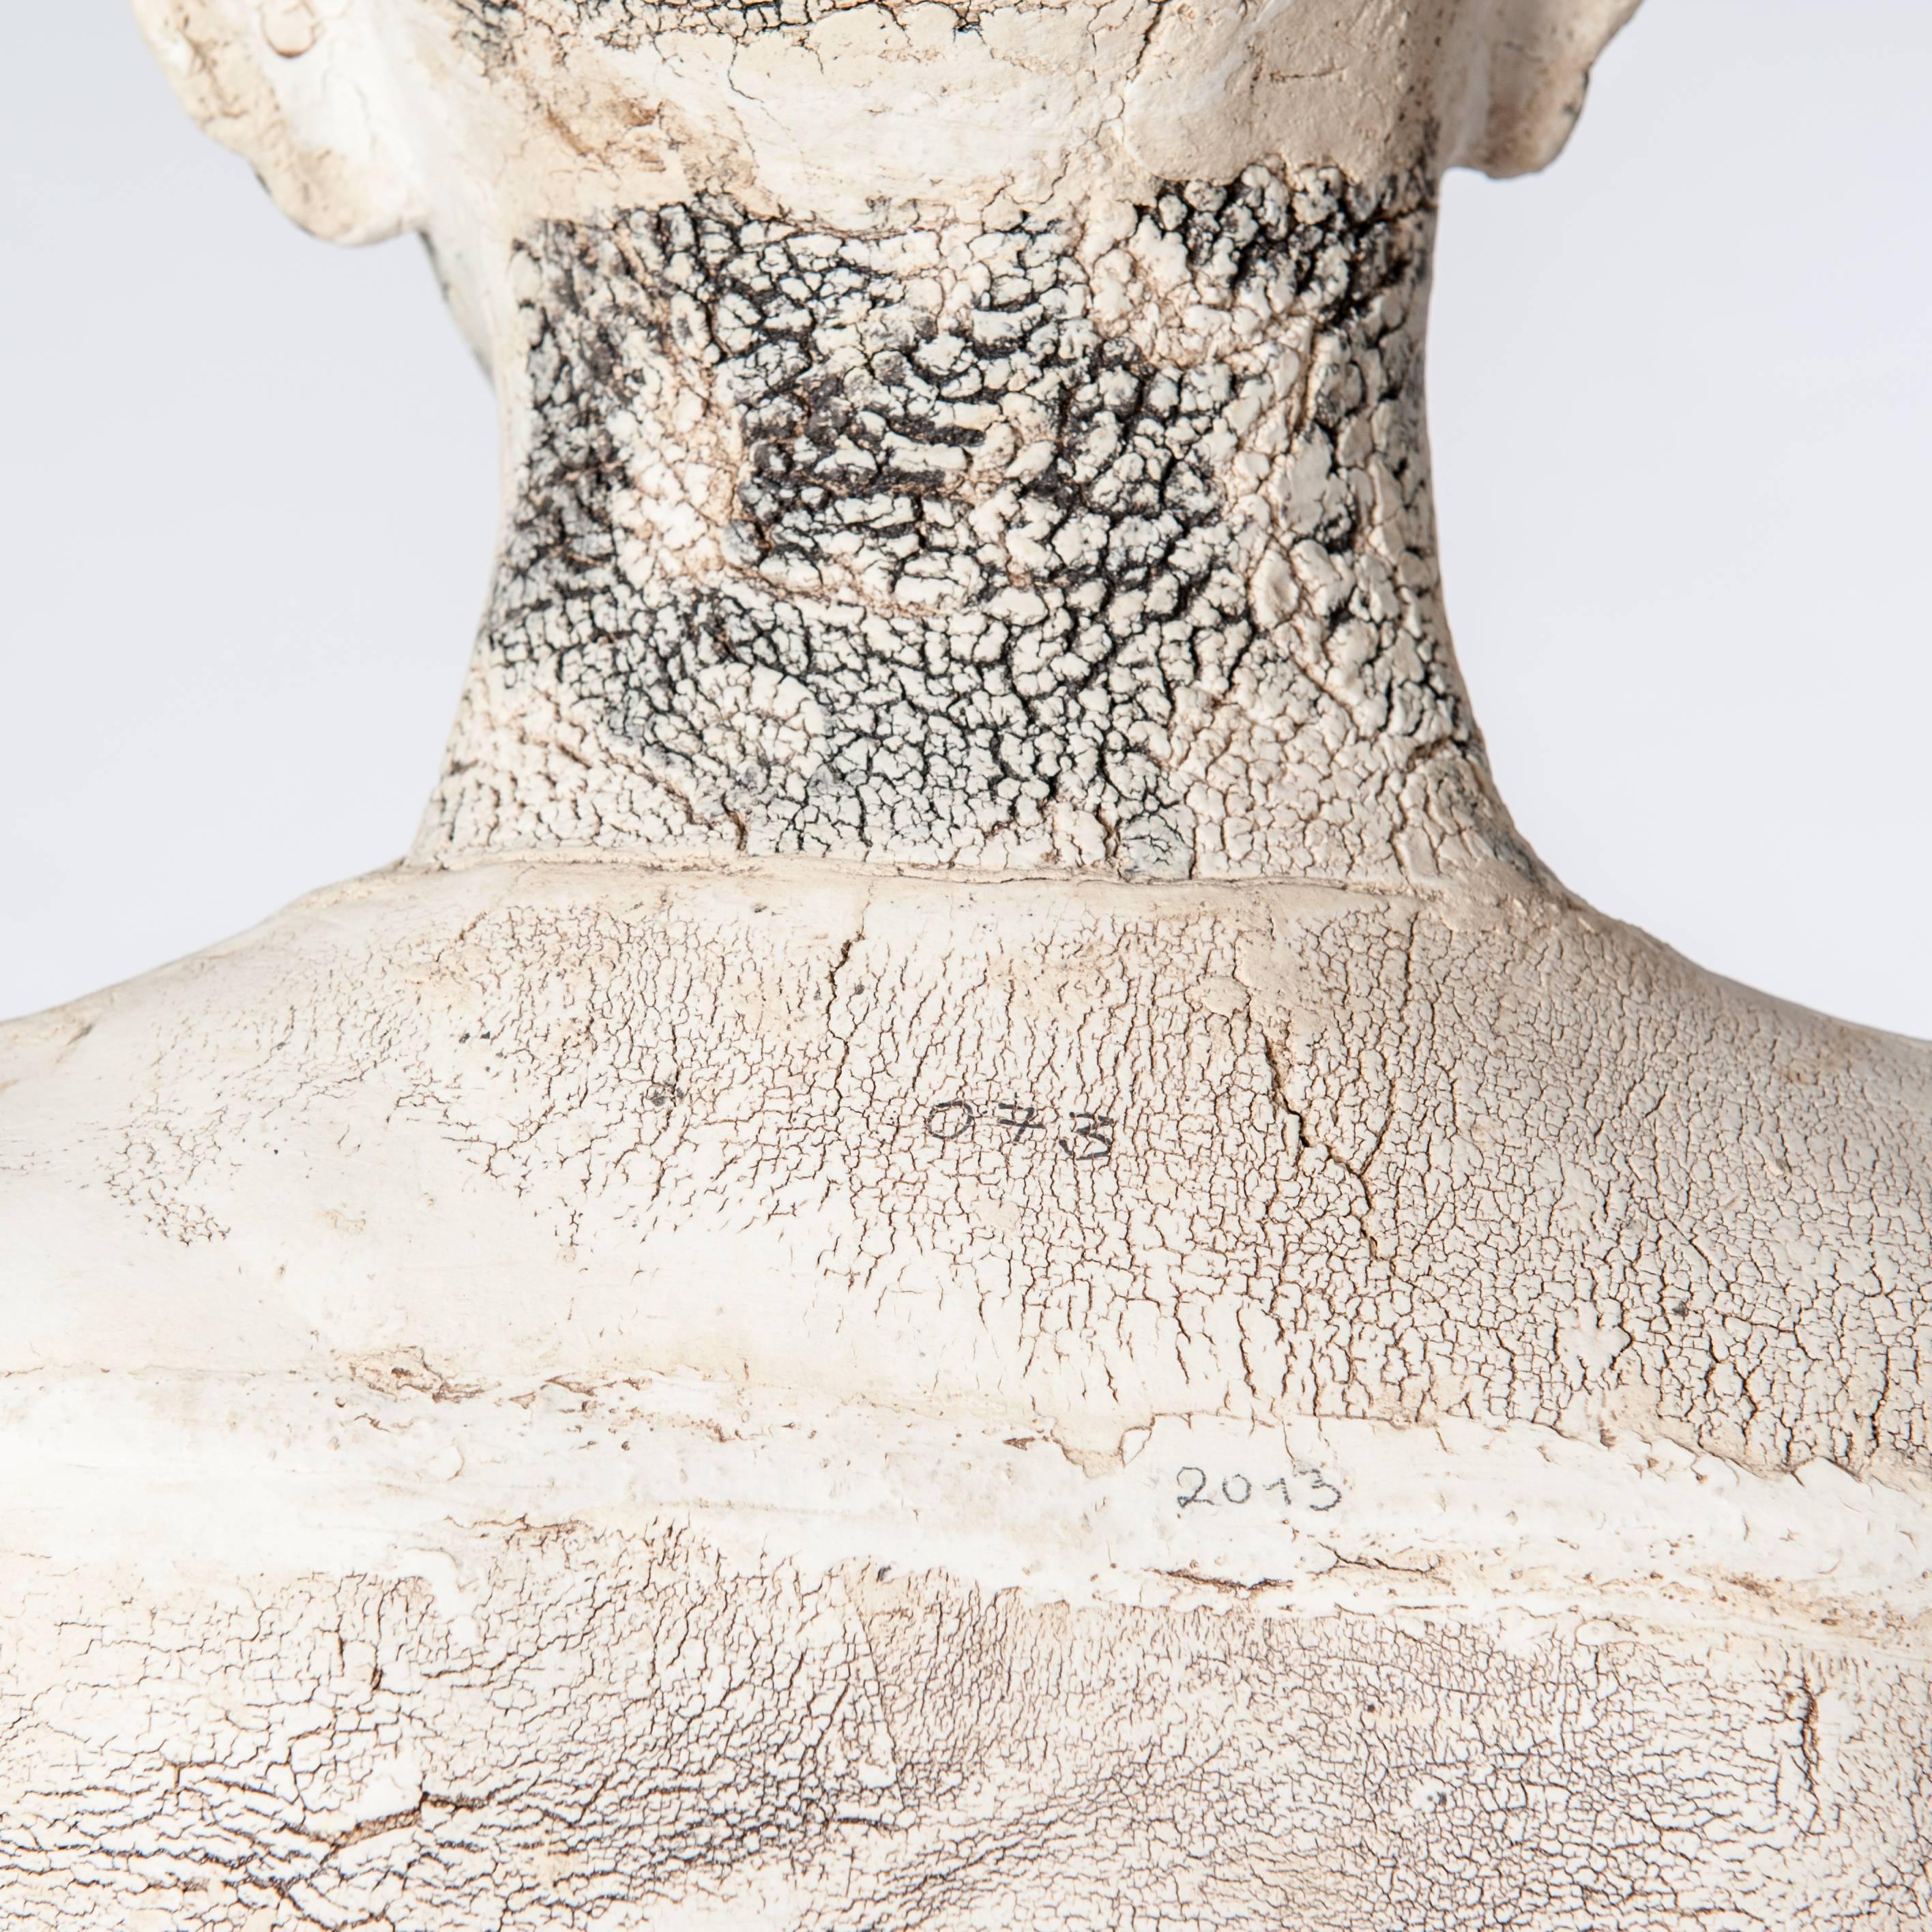 Fired Contemporary Ceramic Figural Lifesize Female Sculpture by Dora Várkonyi For Sale